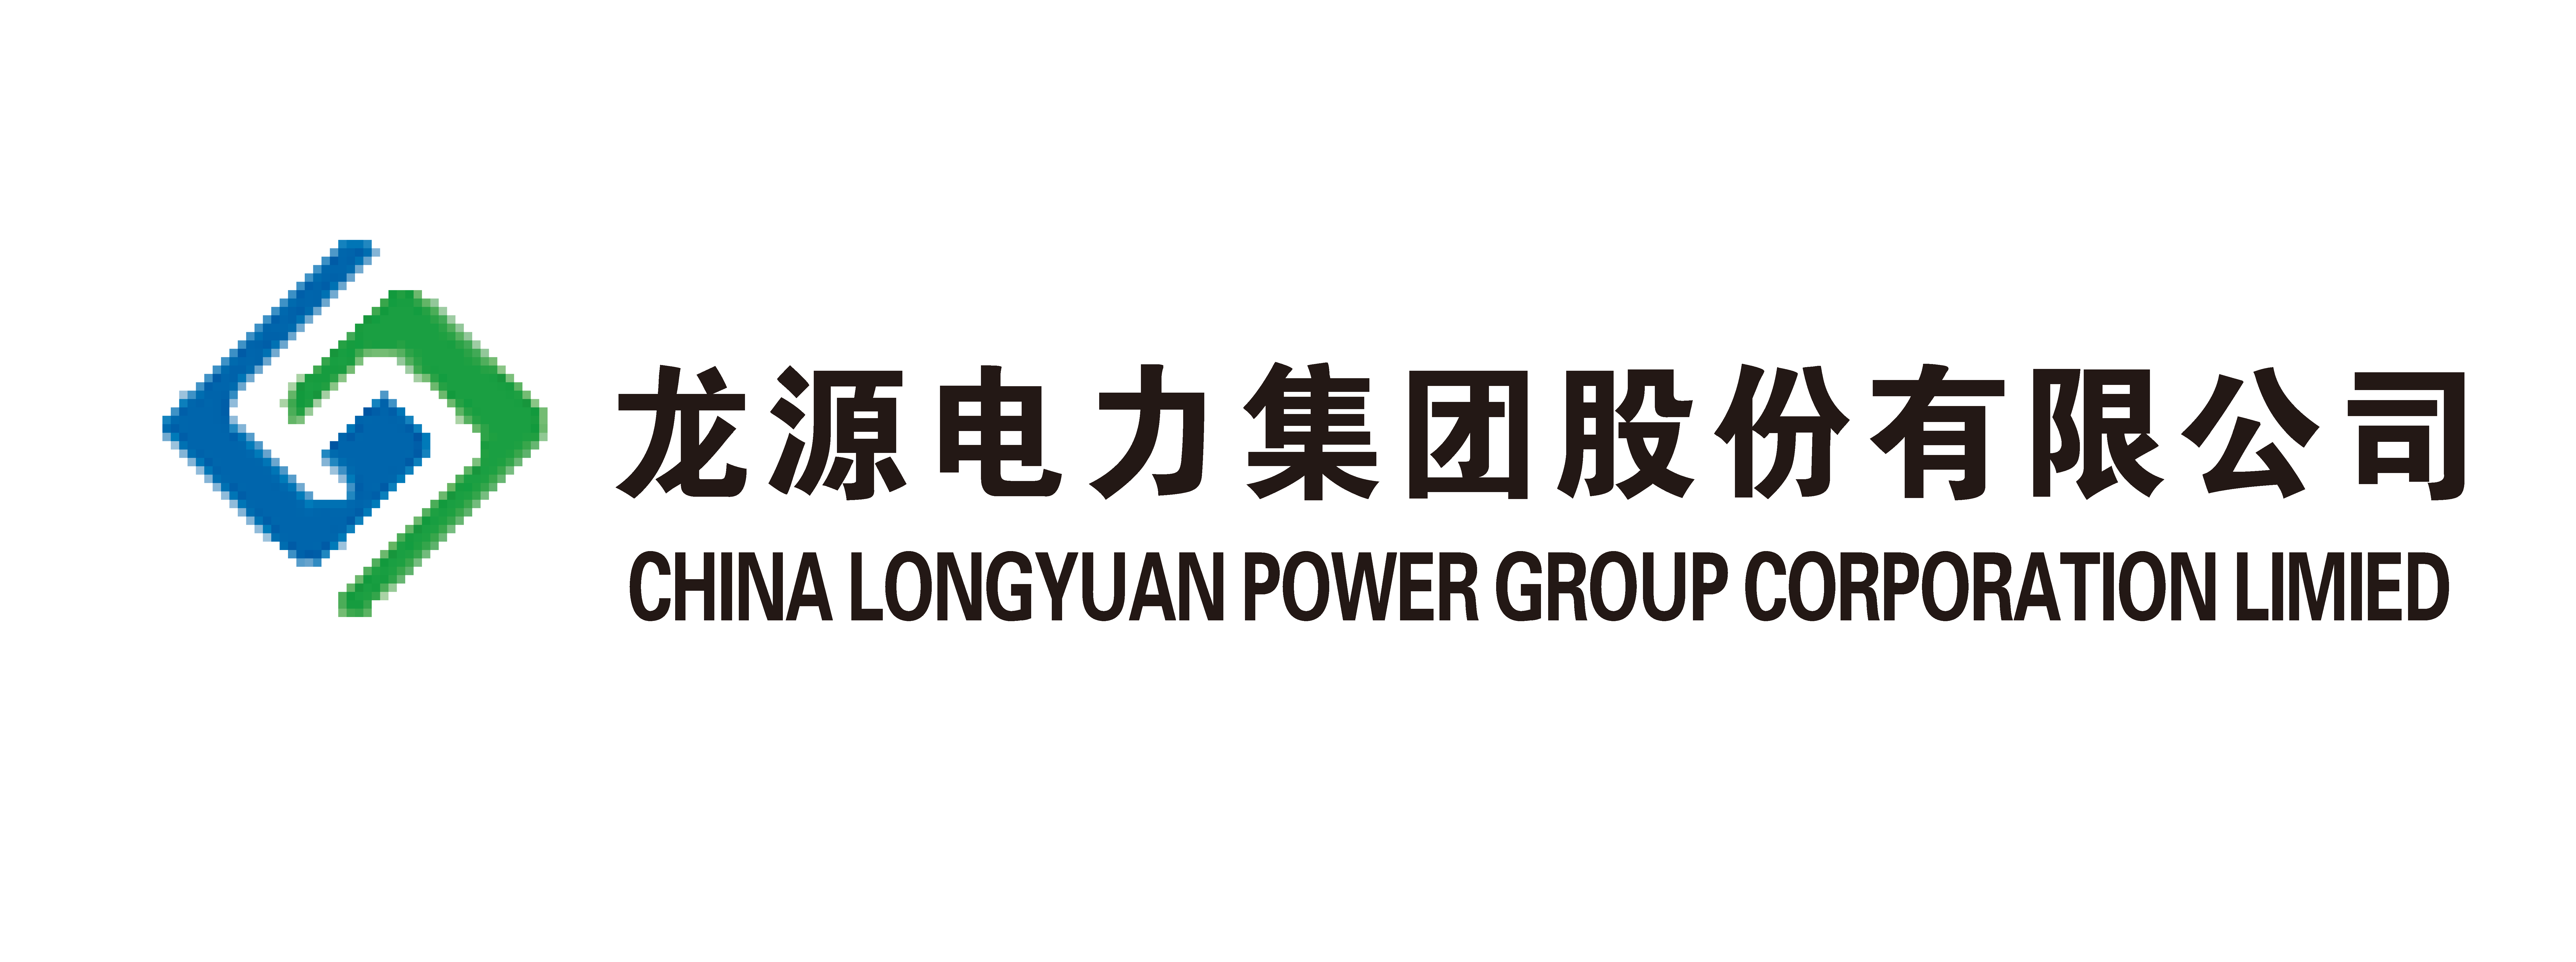 Longyuan Electric Power Group Co., Ltd